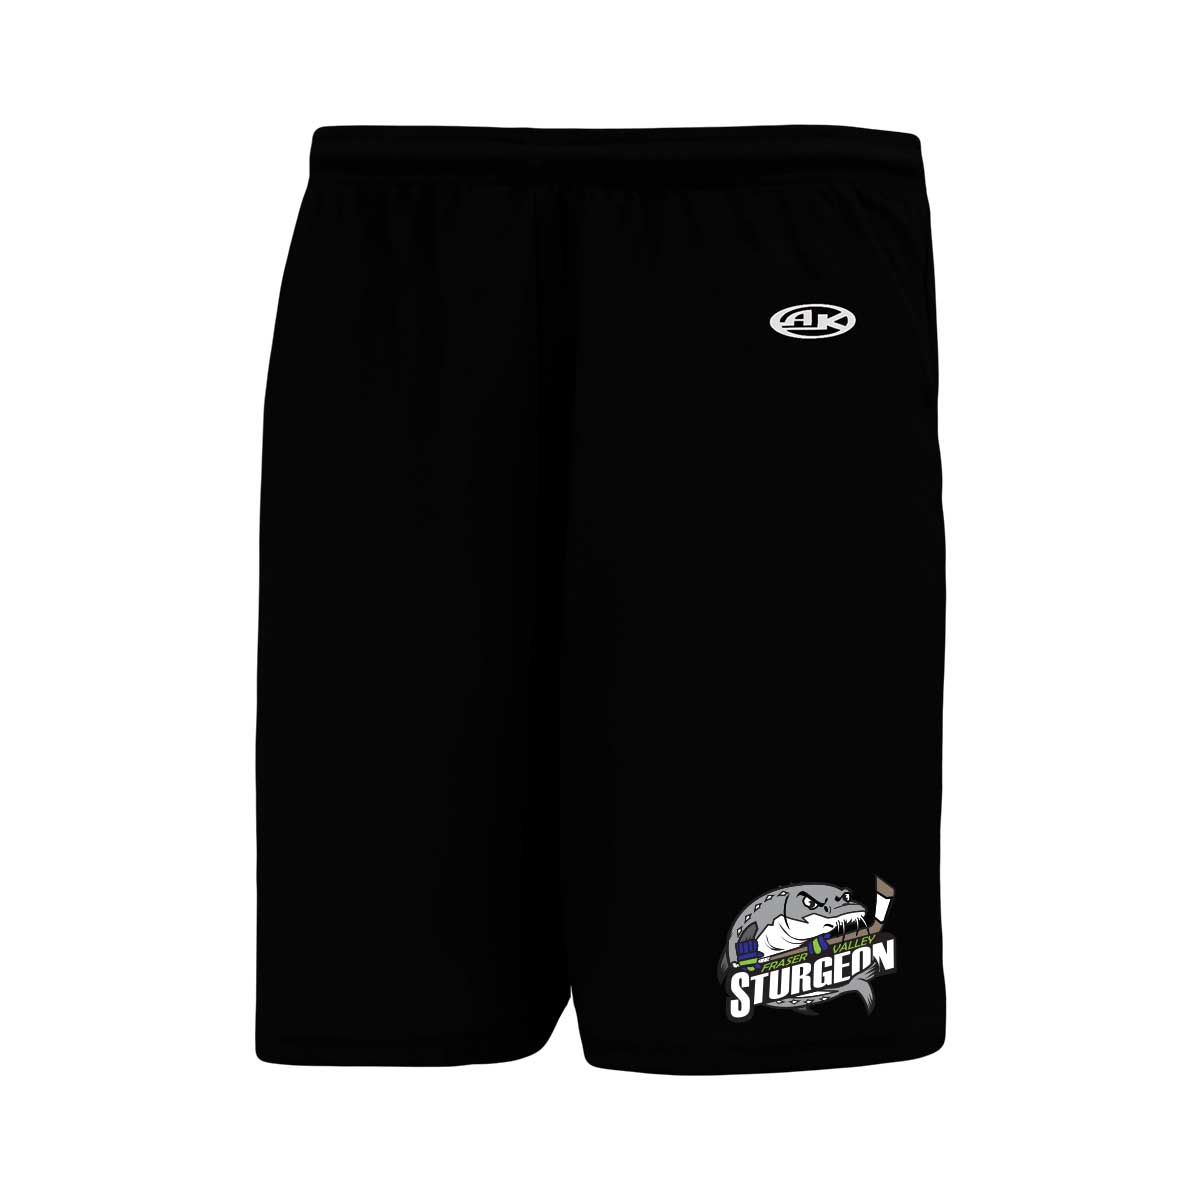 FVS -- Senior Pocketed Shorts